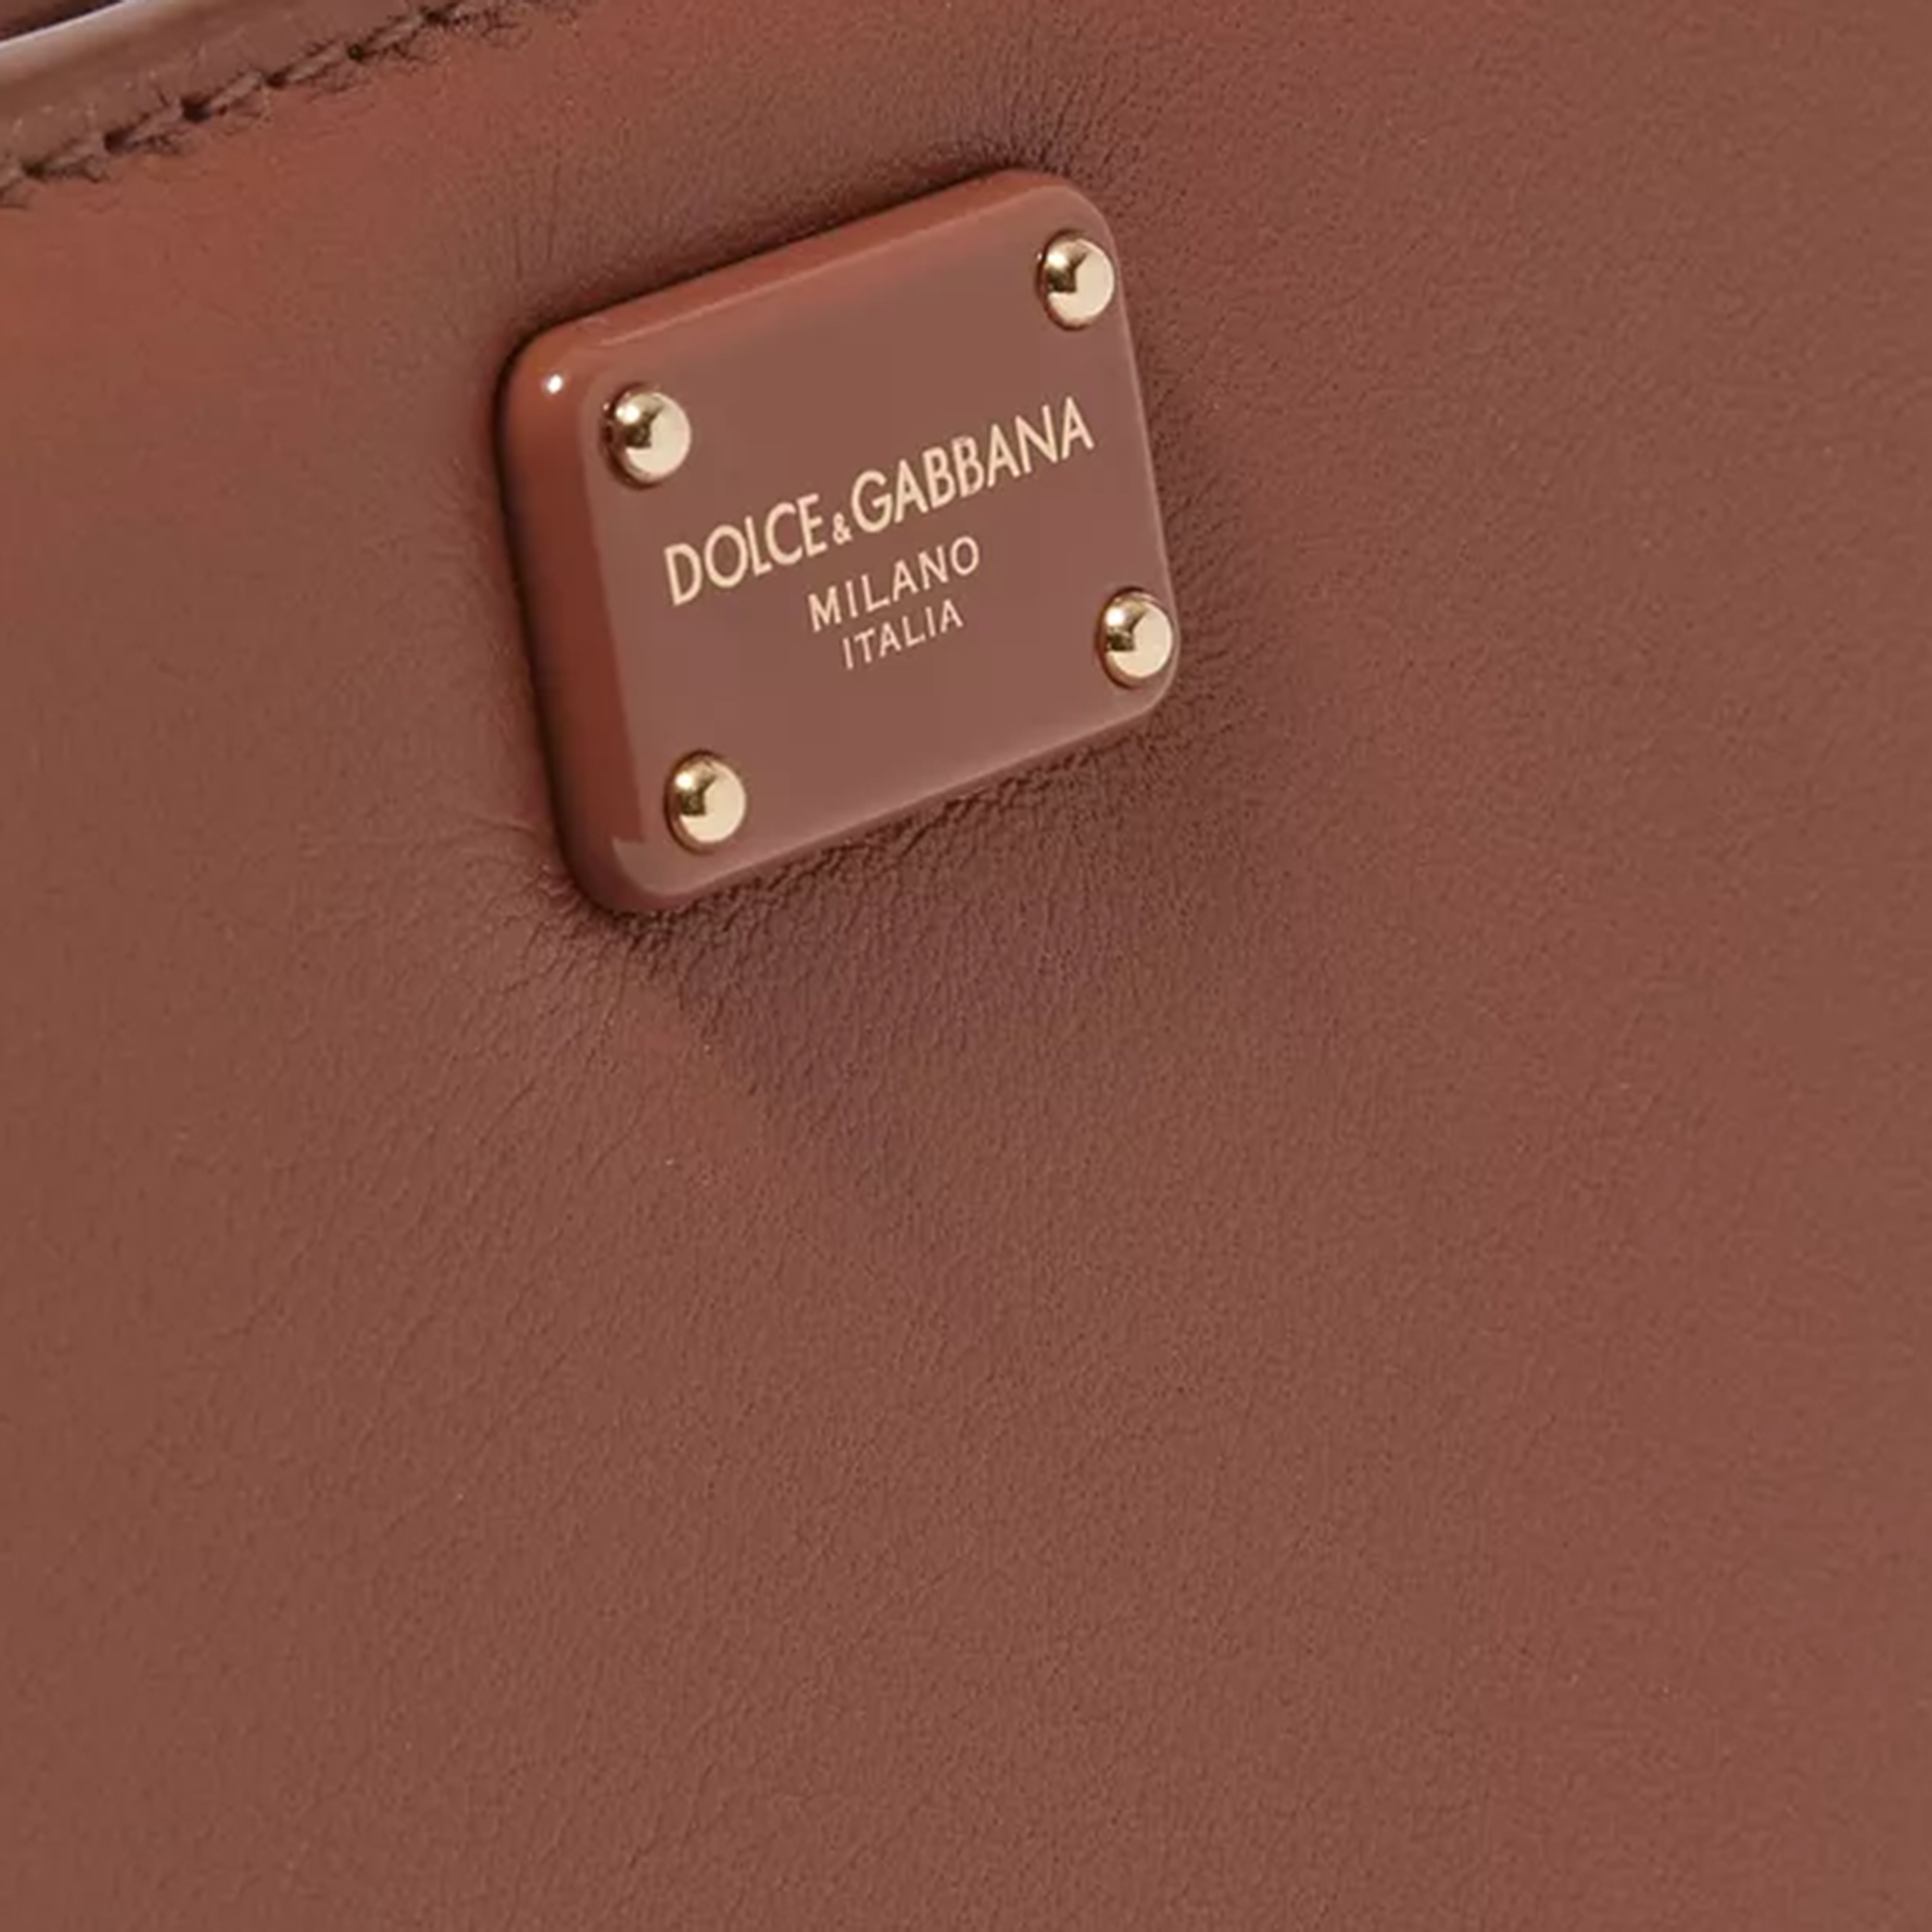 Dolce & Gabbana Brown  Leather  Bi-Fold Wallet